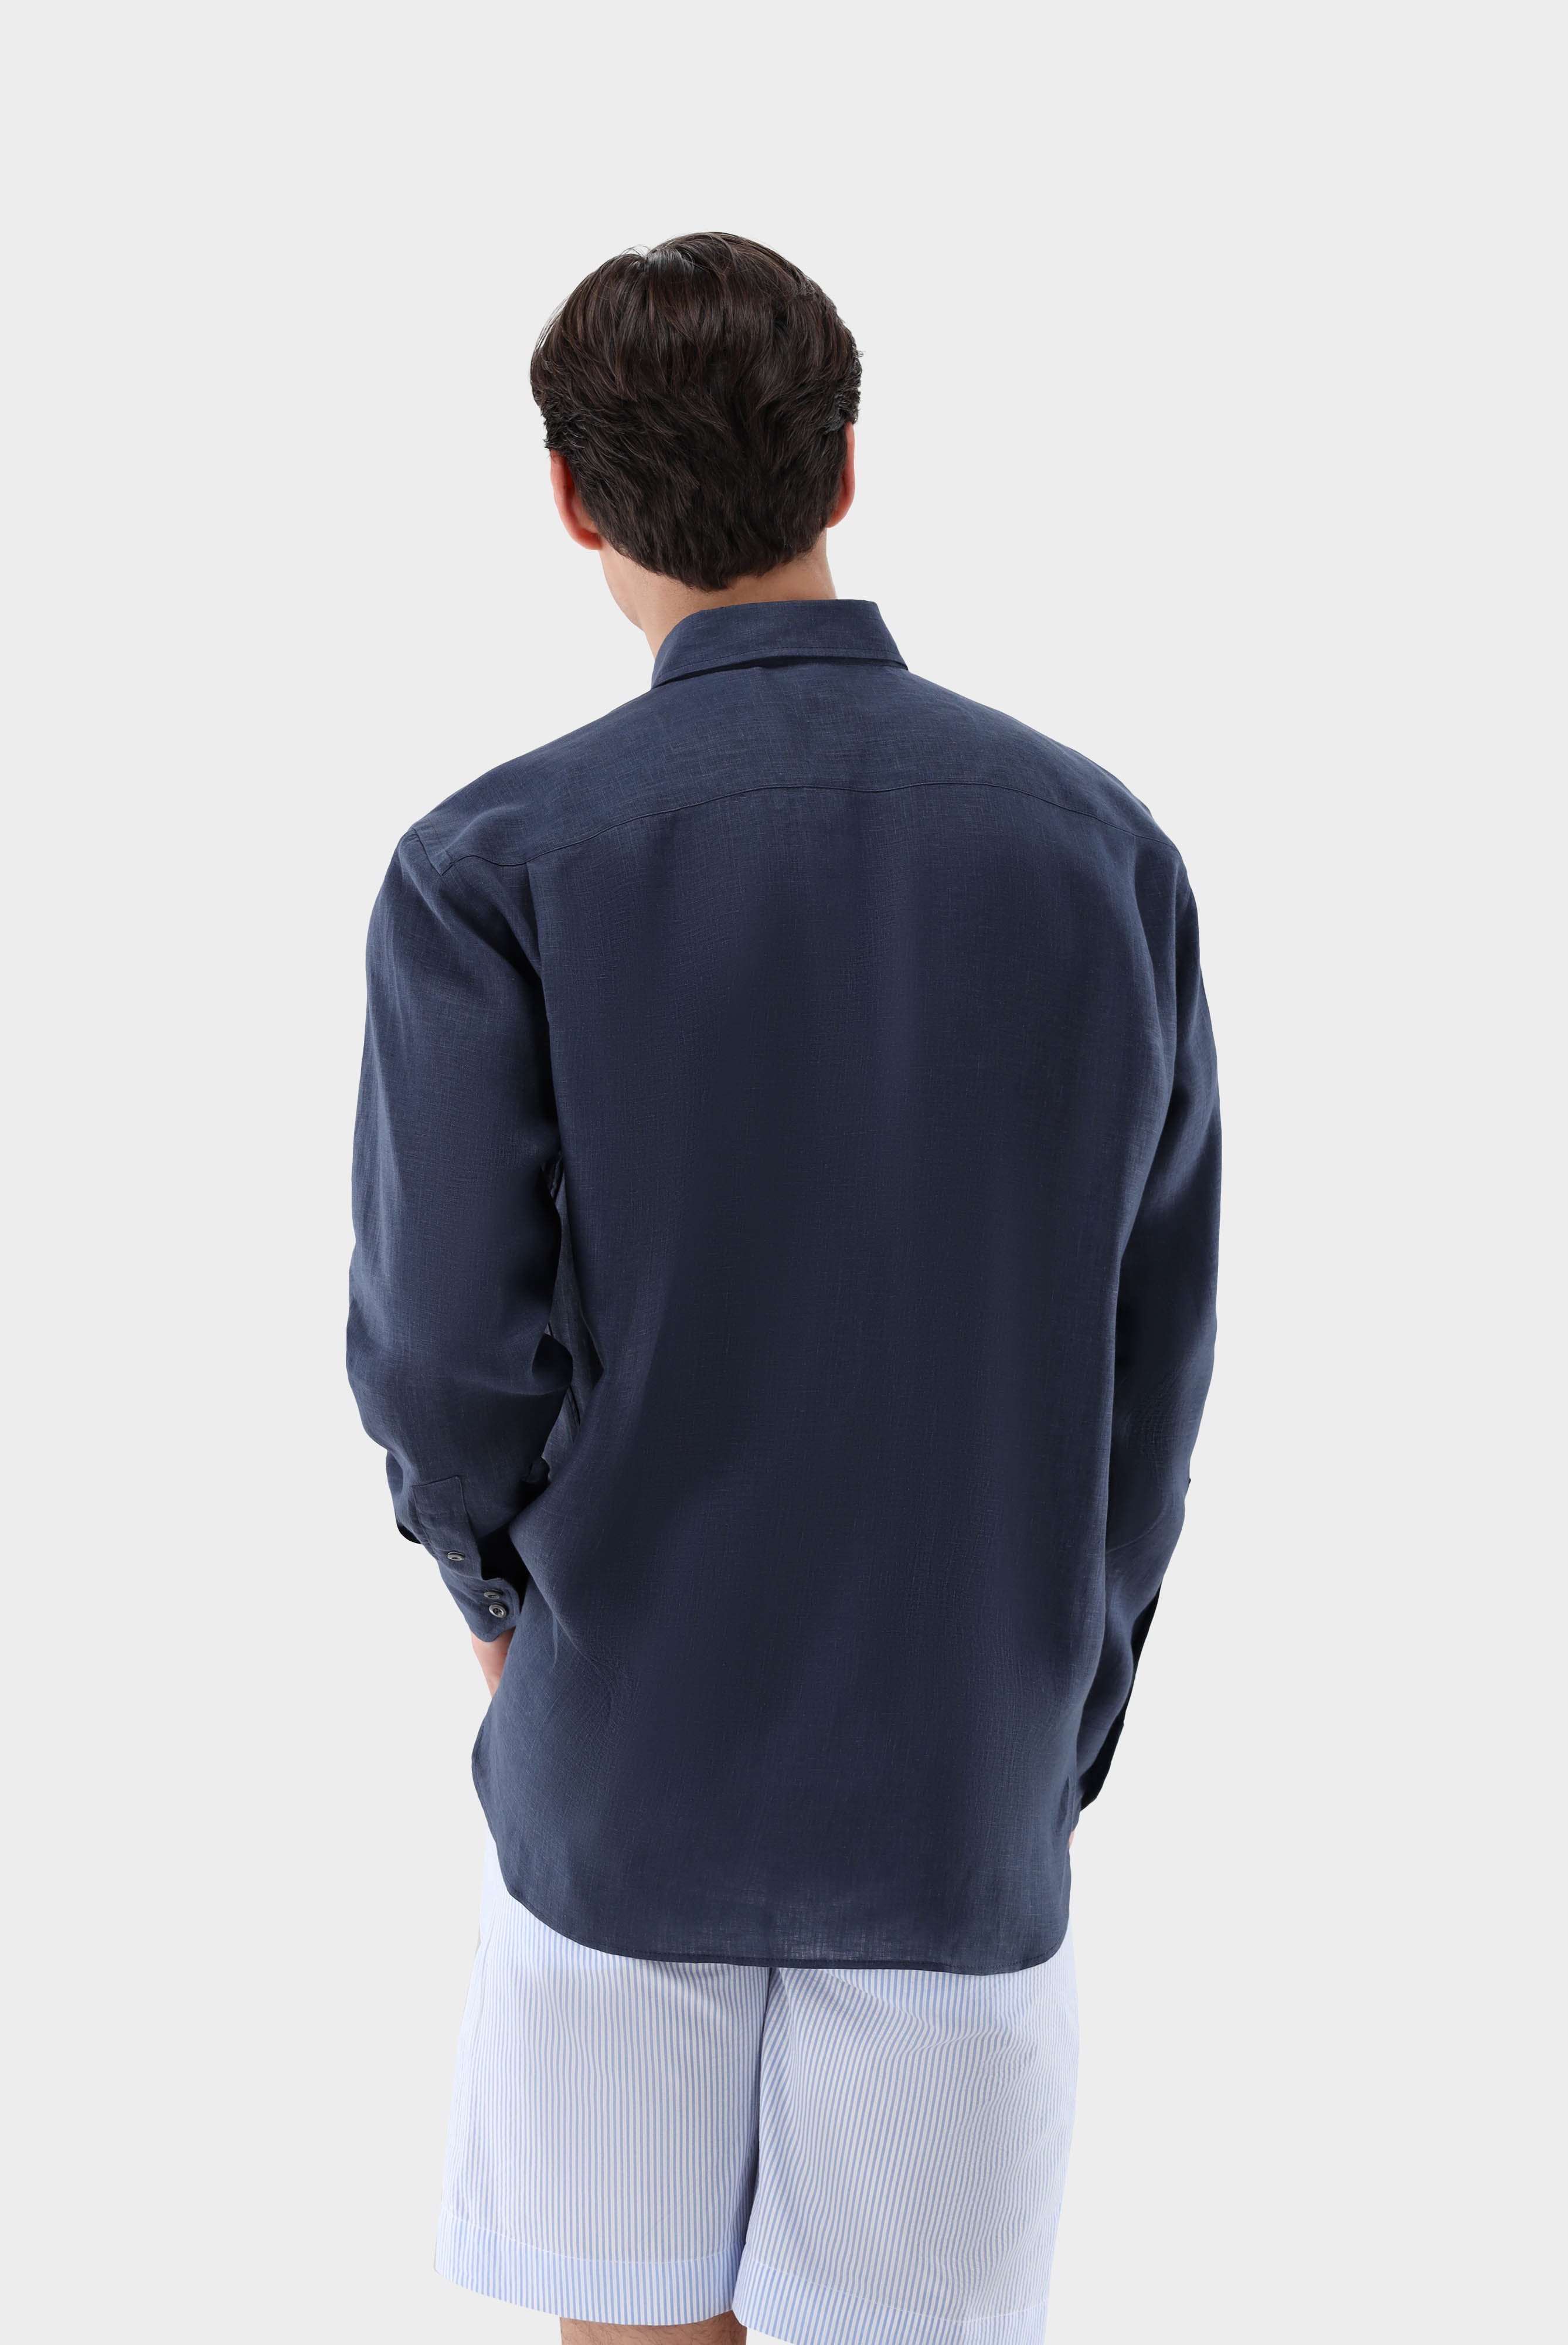 Casual Shirts+Linen Button-Down Collar Shirt+20.2026.9V.150555.785.45